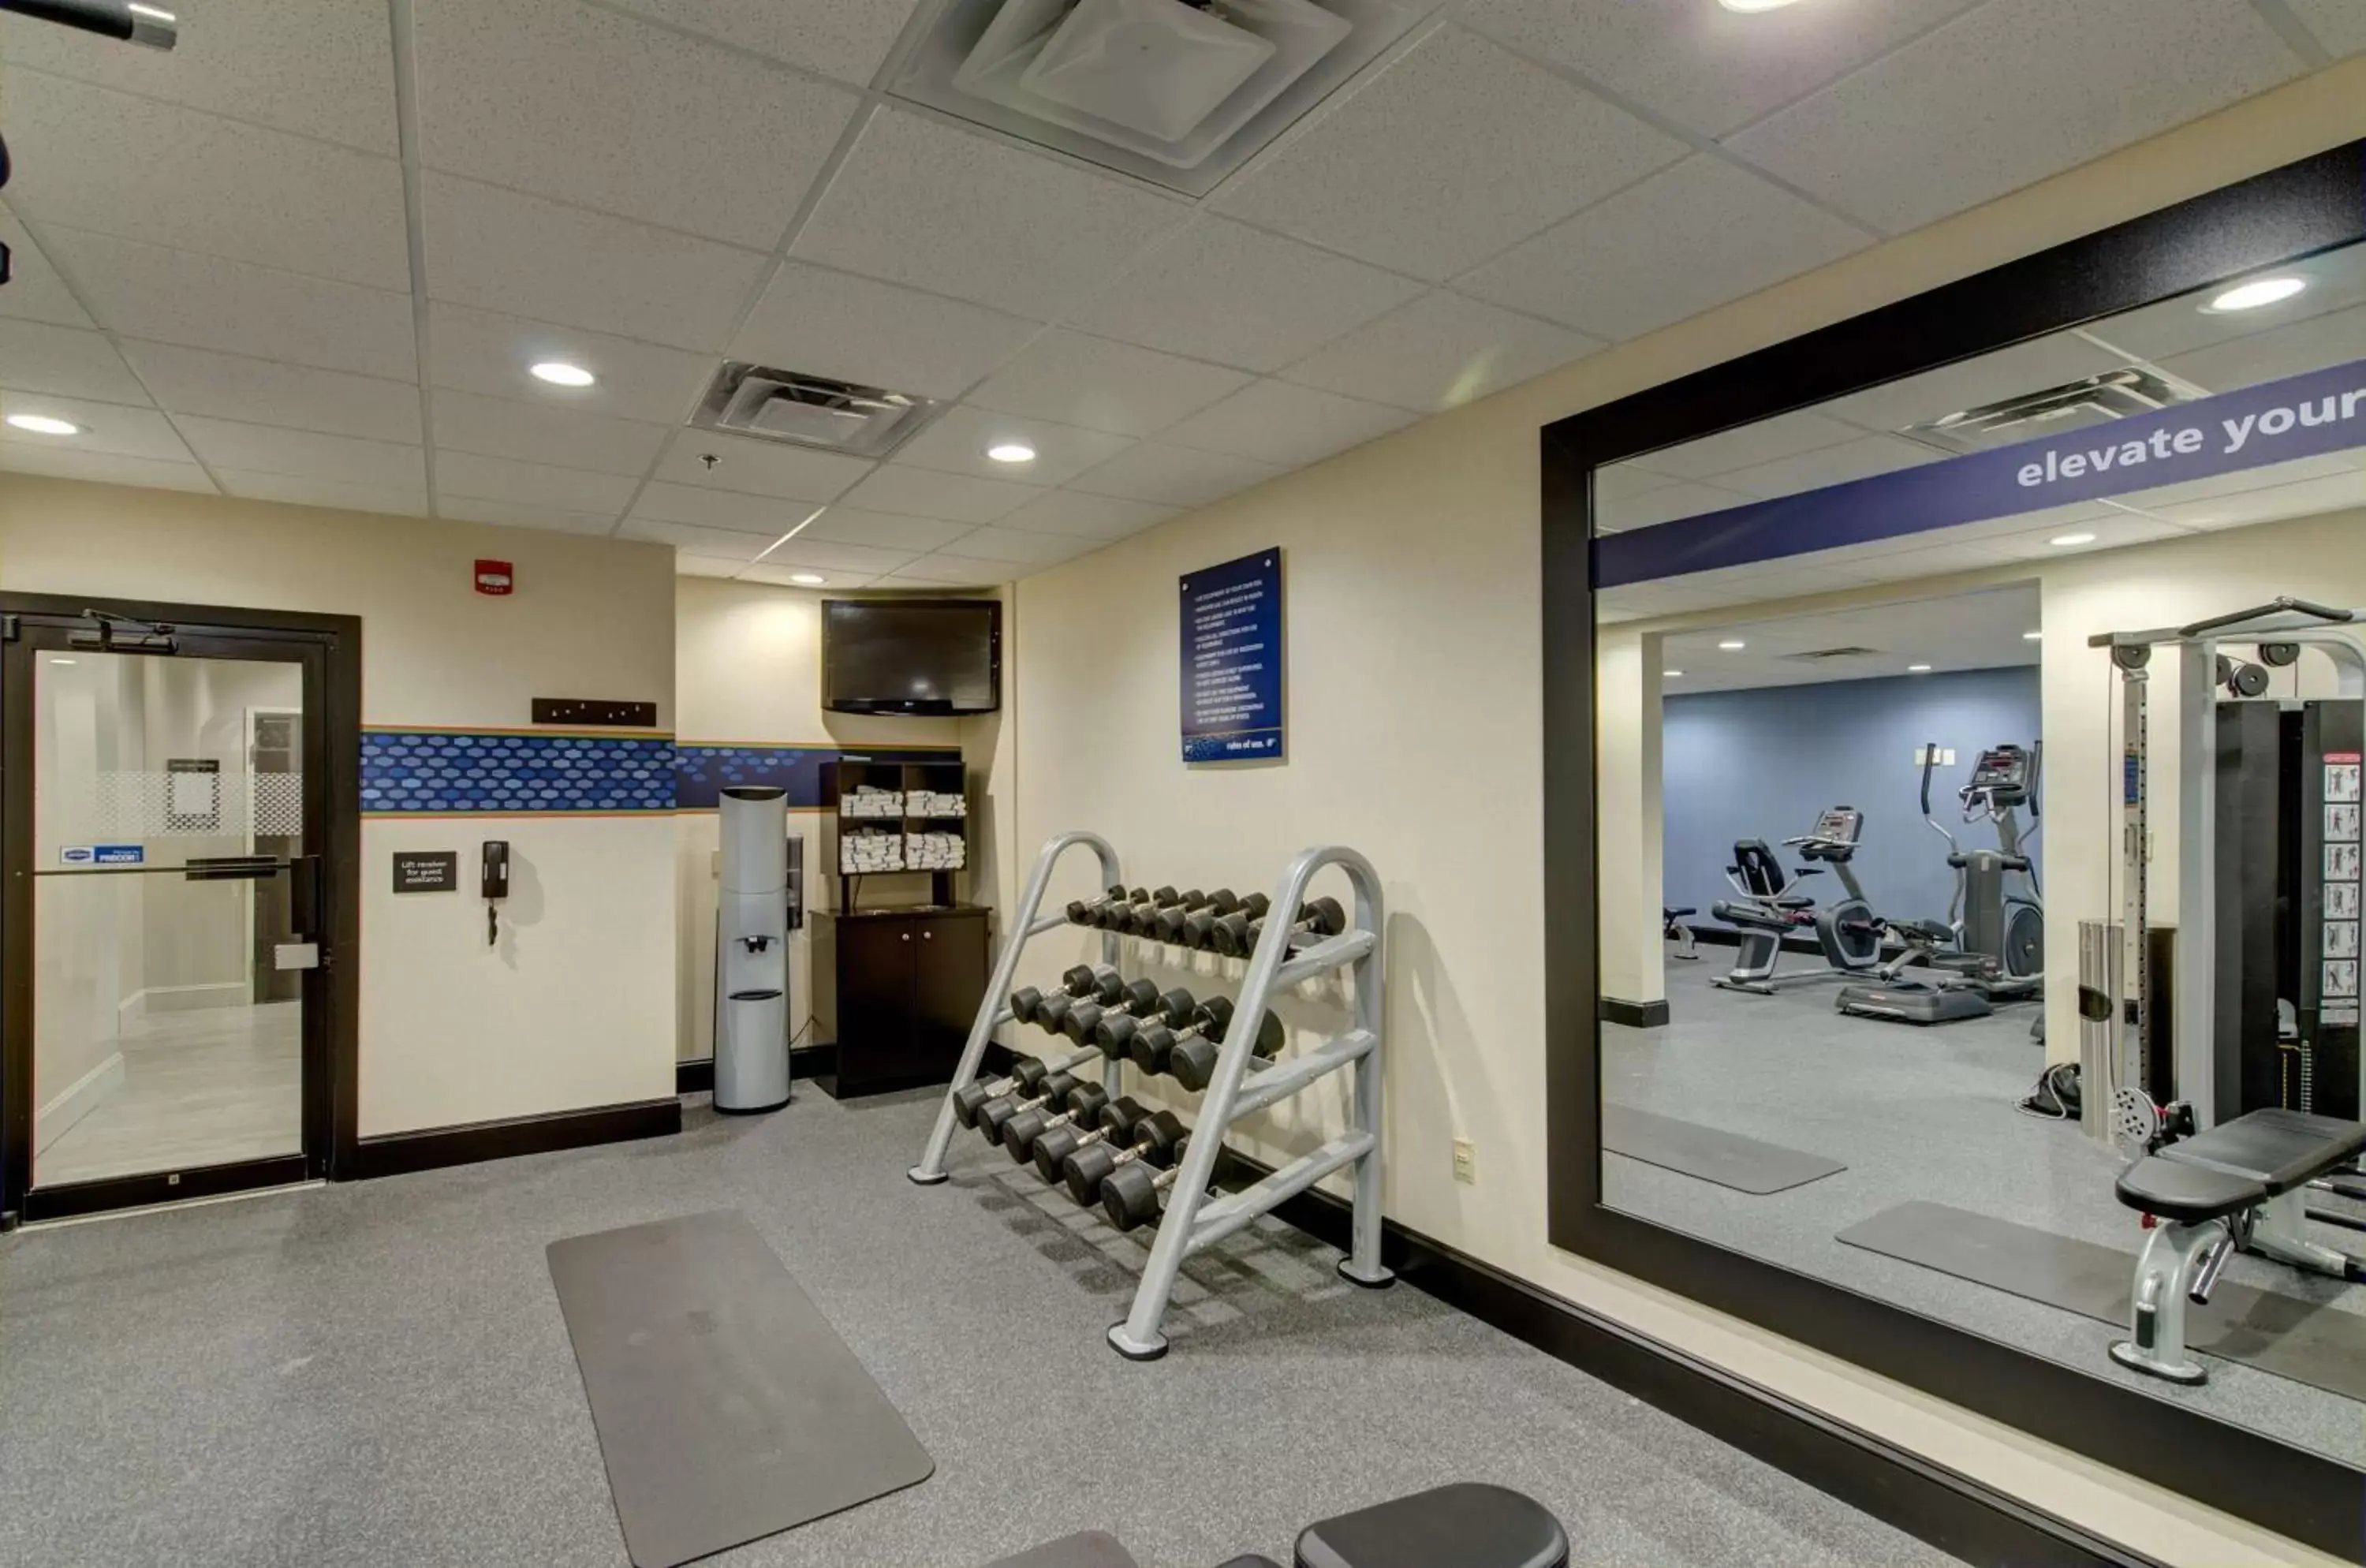 Fitness centre/facilities, Fitness Center/Facilities in Hampton Inn Salem